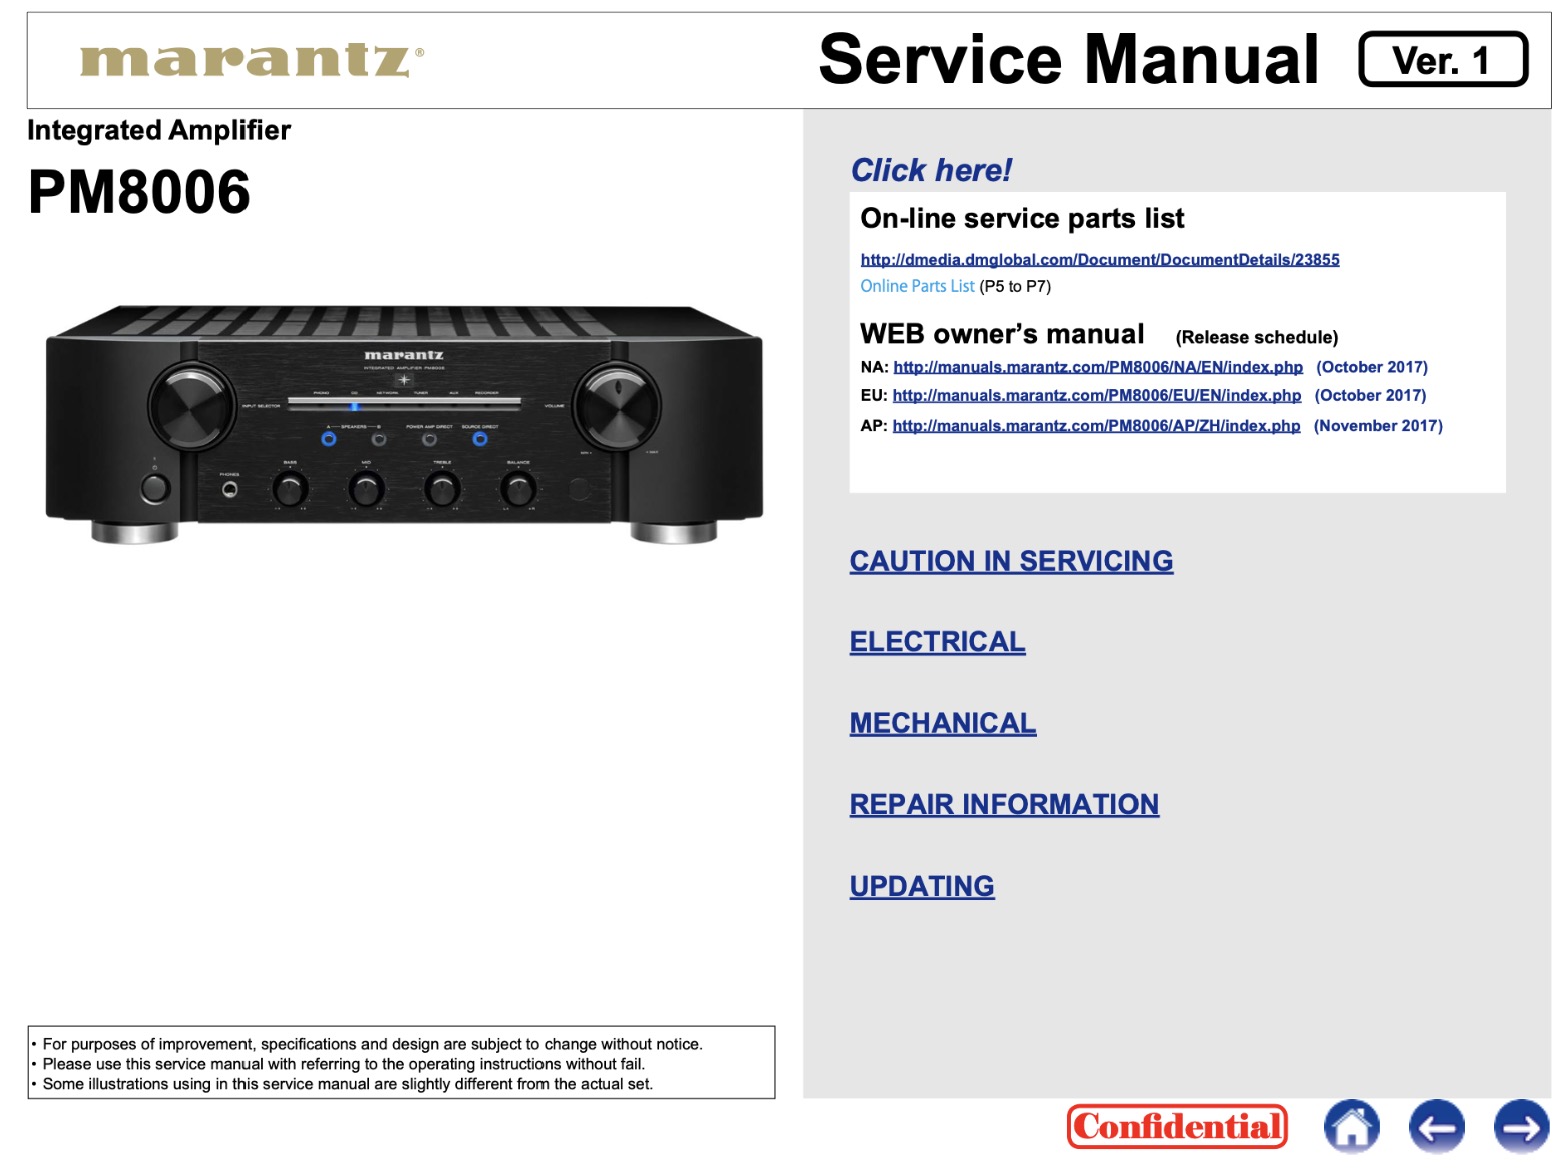 Marantz PM8006 Integrated Amplifier Service Manual, Exploded View, Parts List, Schematic Diagram, Cirquit Description